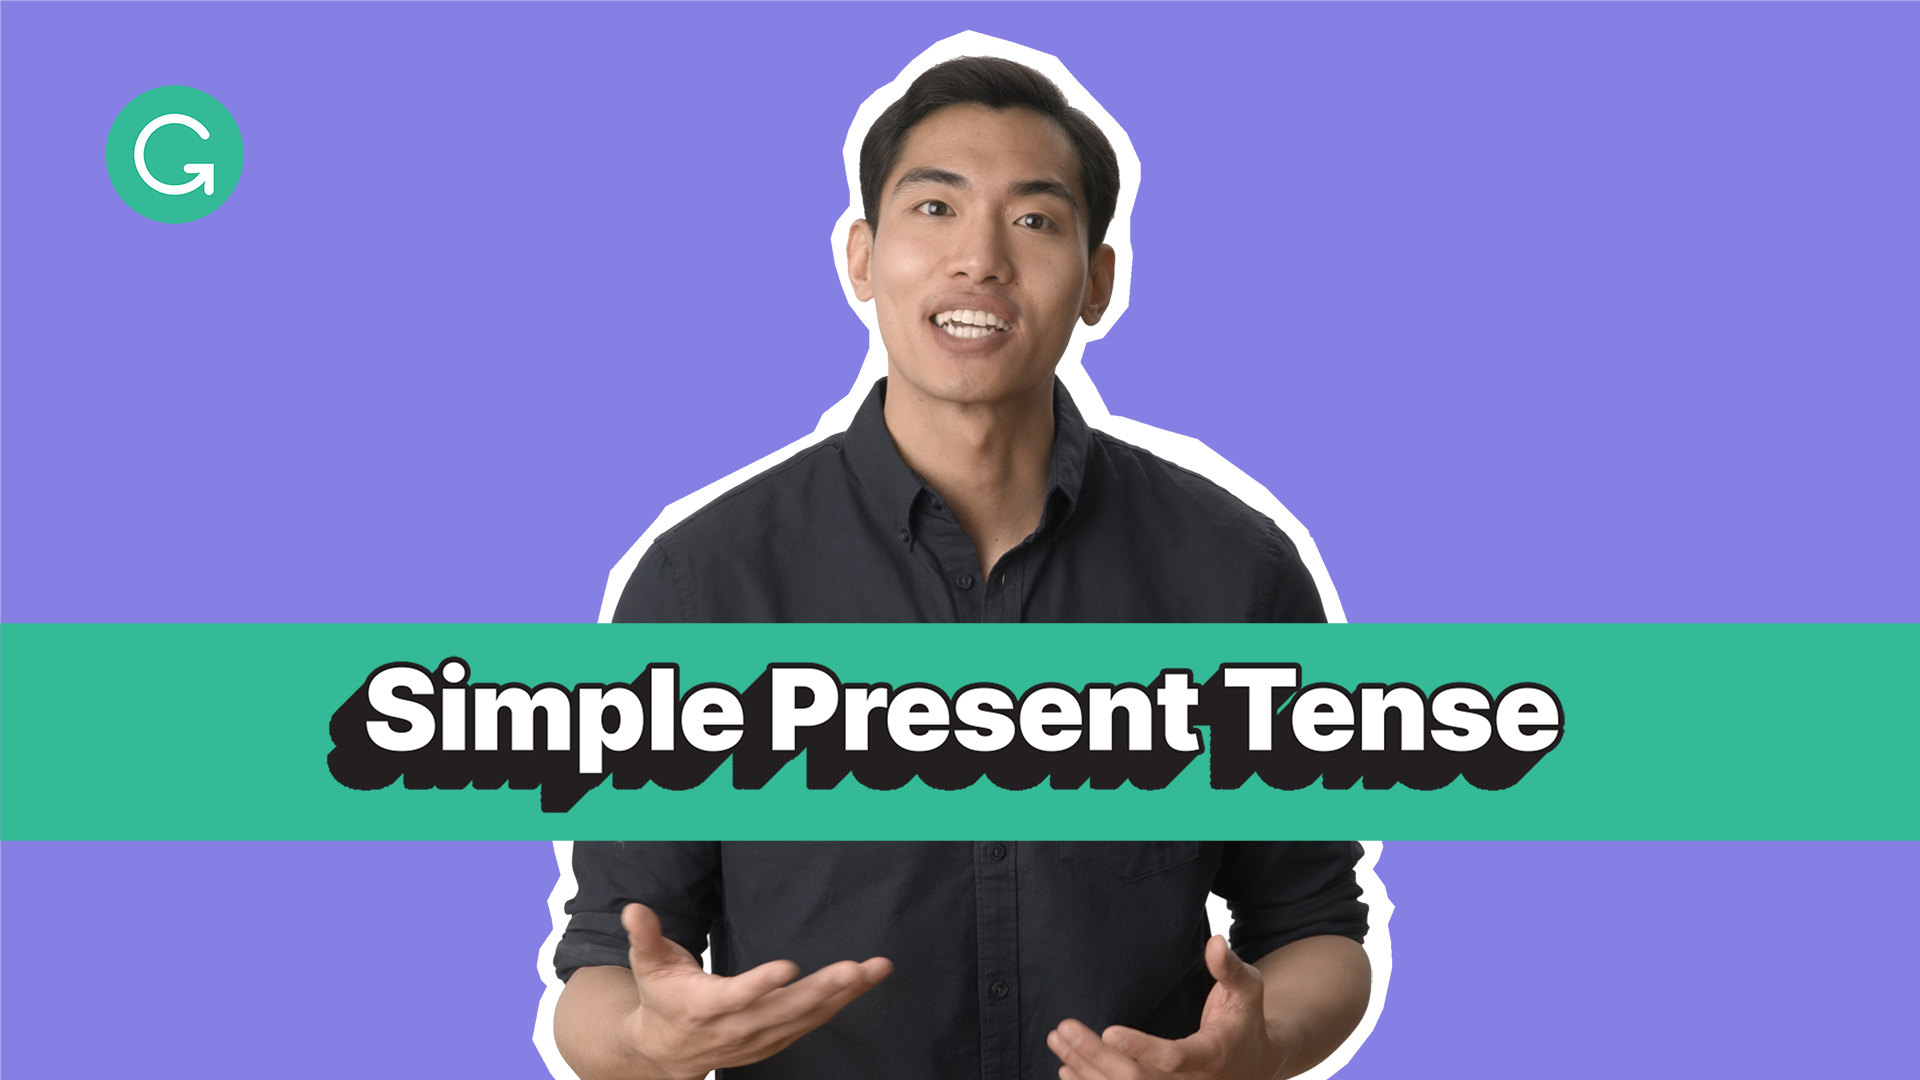 Play Video - Simple Present Tense